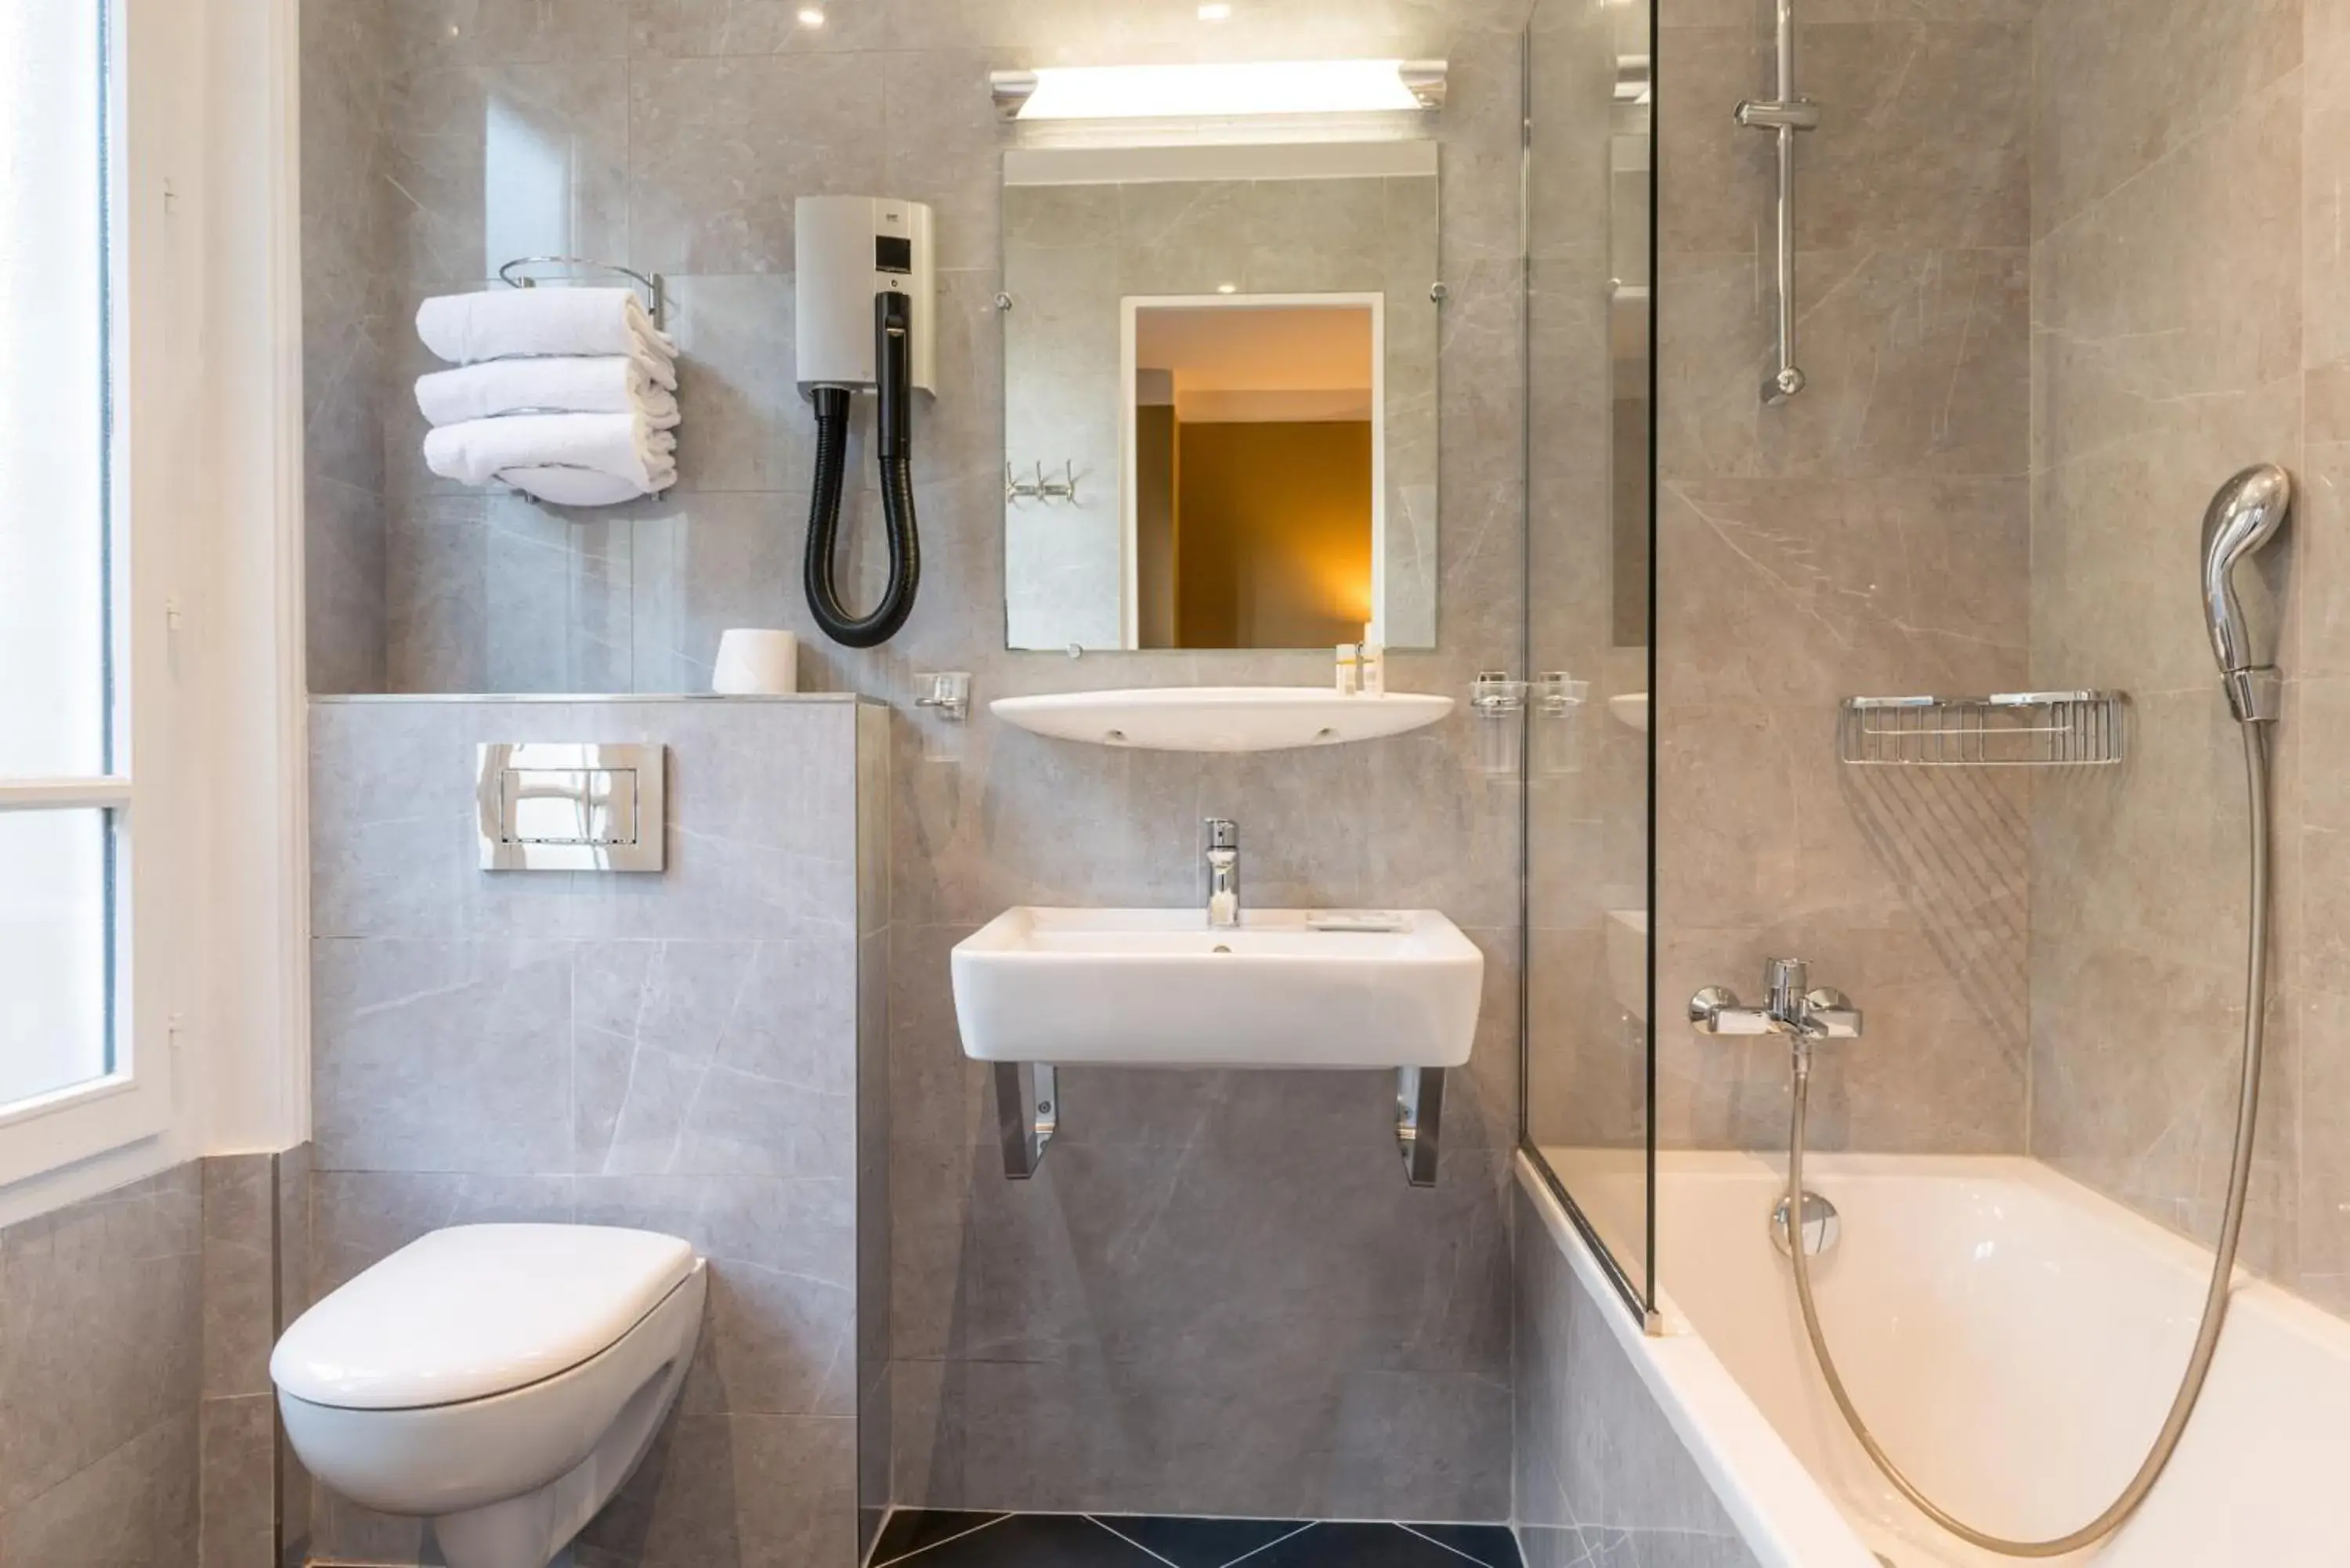 Bathroom in Paris France Hotel